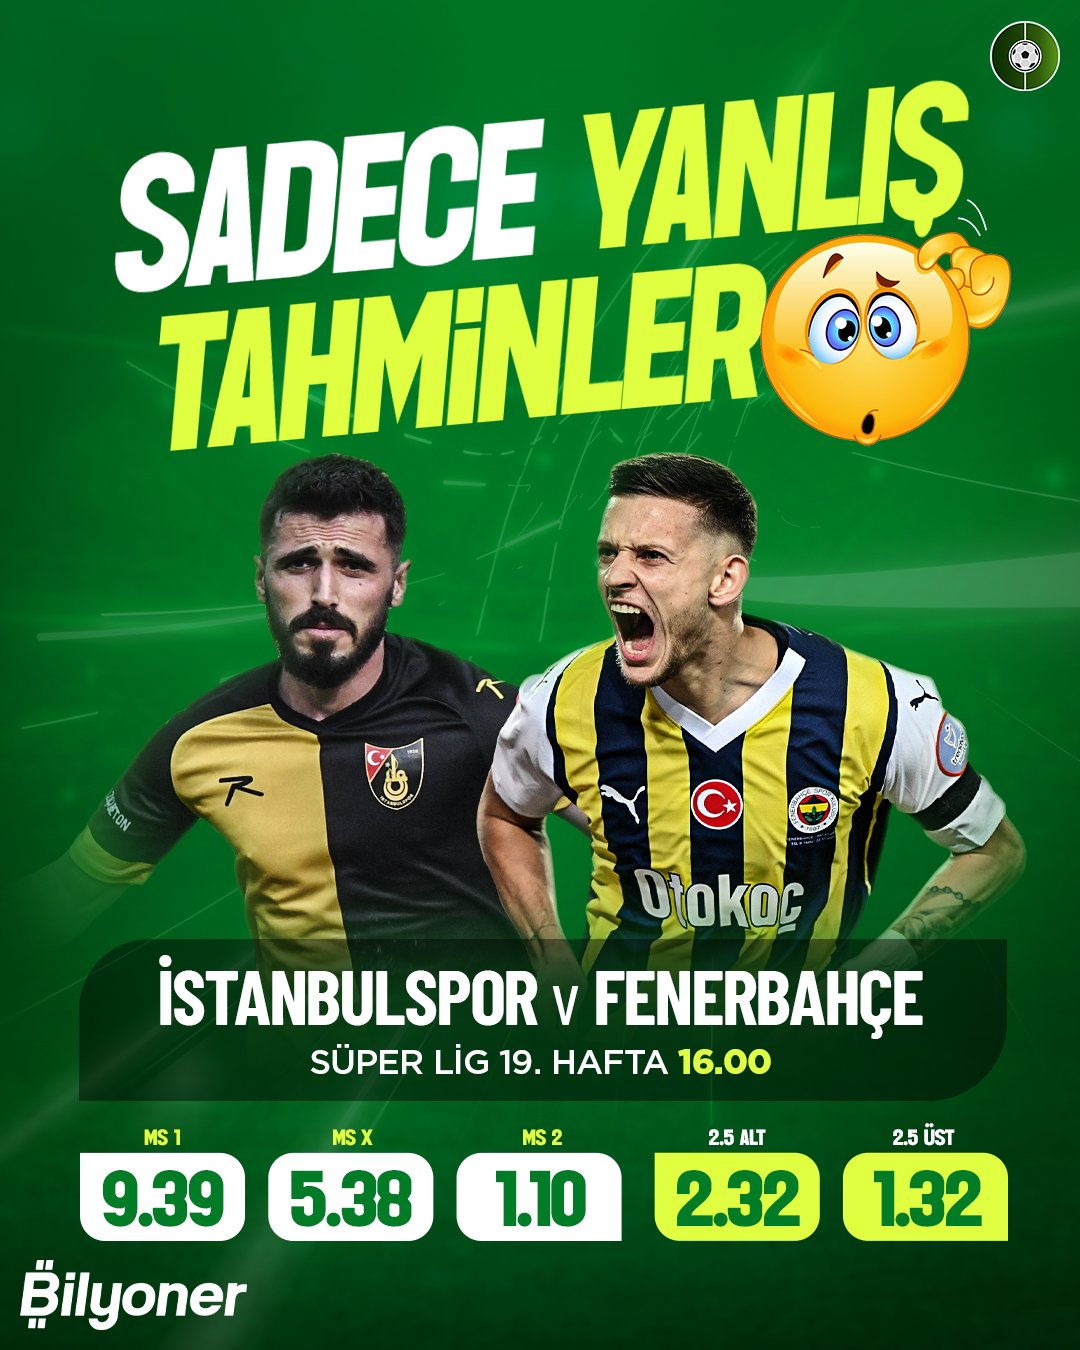 The Fenerbahçe vs Galatasaray Rivalry: A Battle of Turkish Football Titans